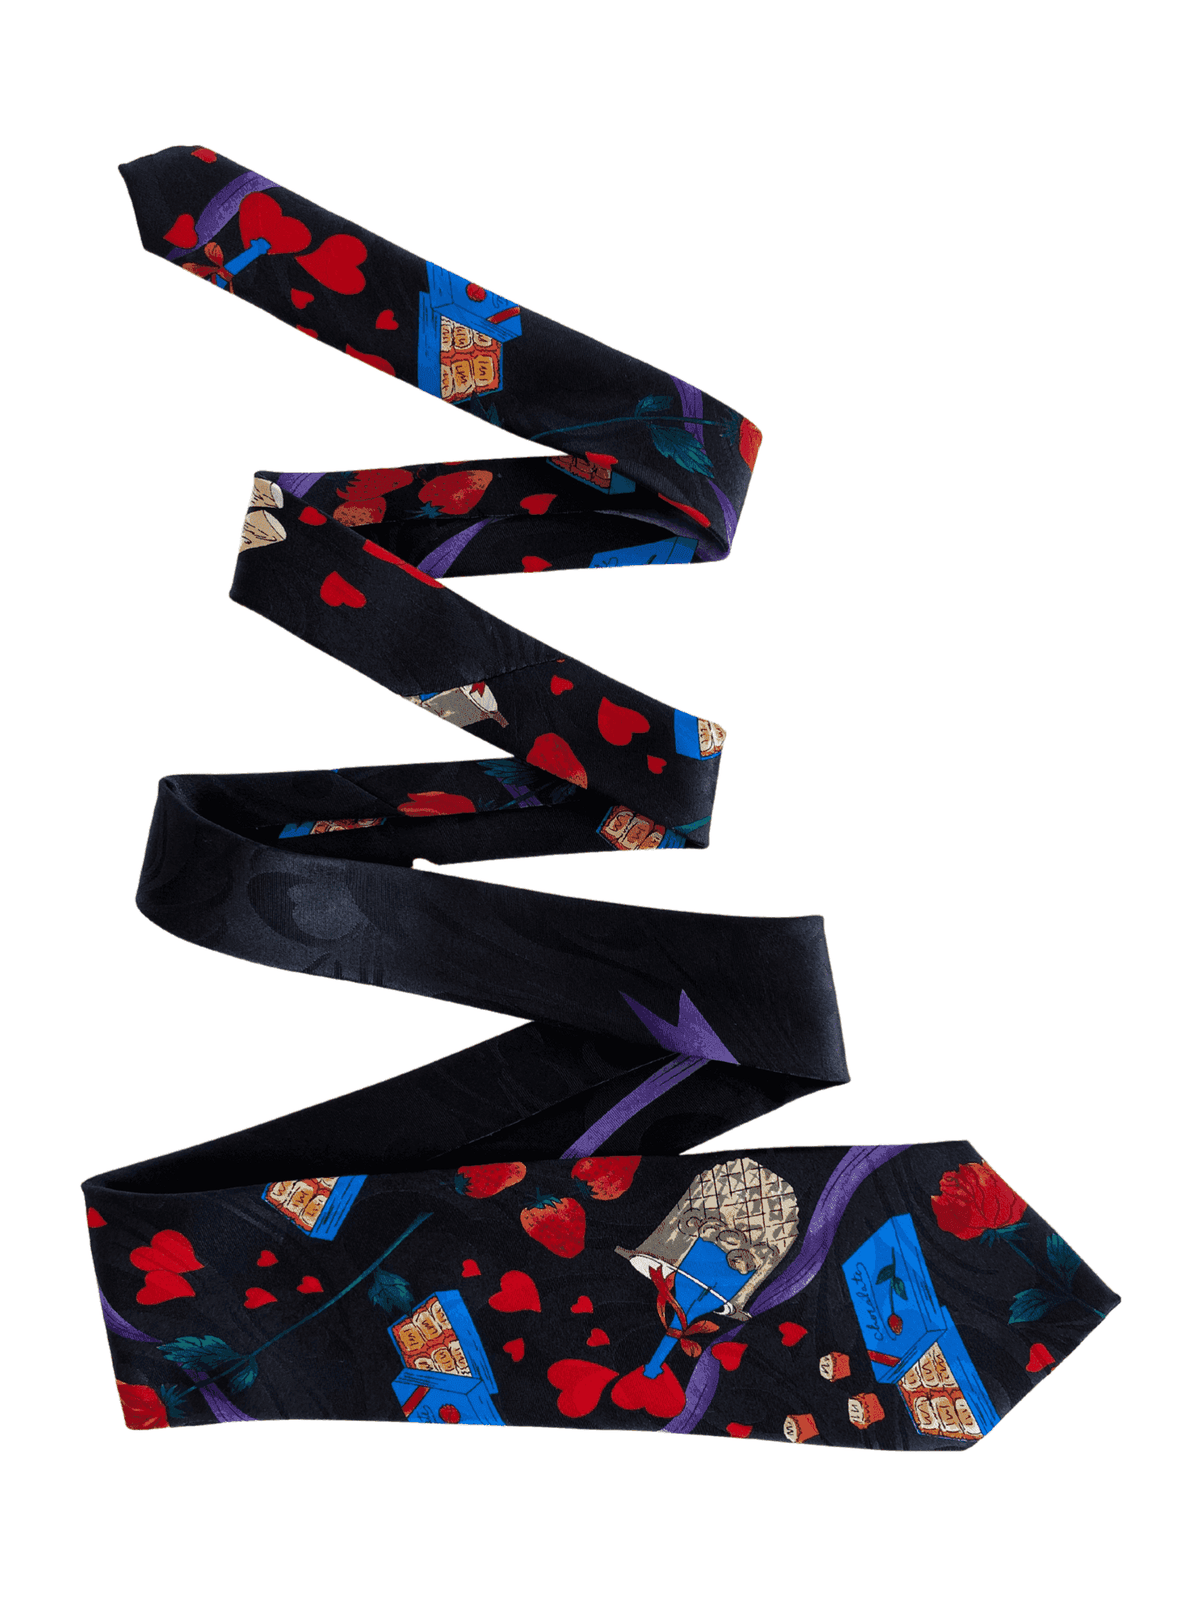 Vintage Fratello Handmade Graphic Tie - Balagan Vintage